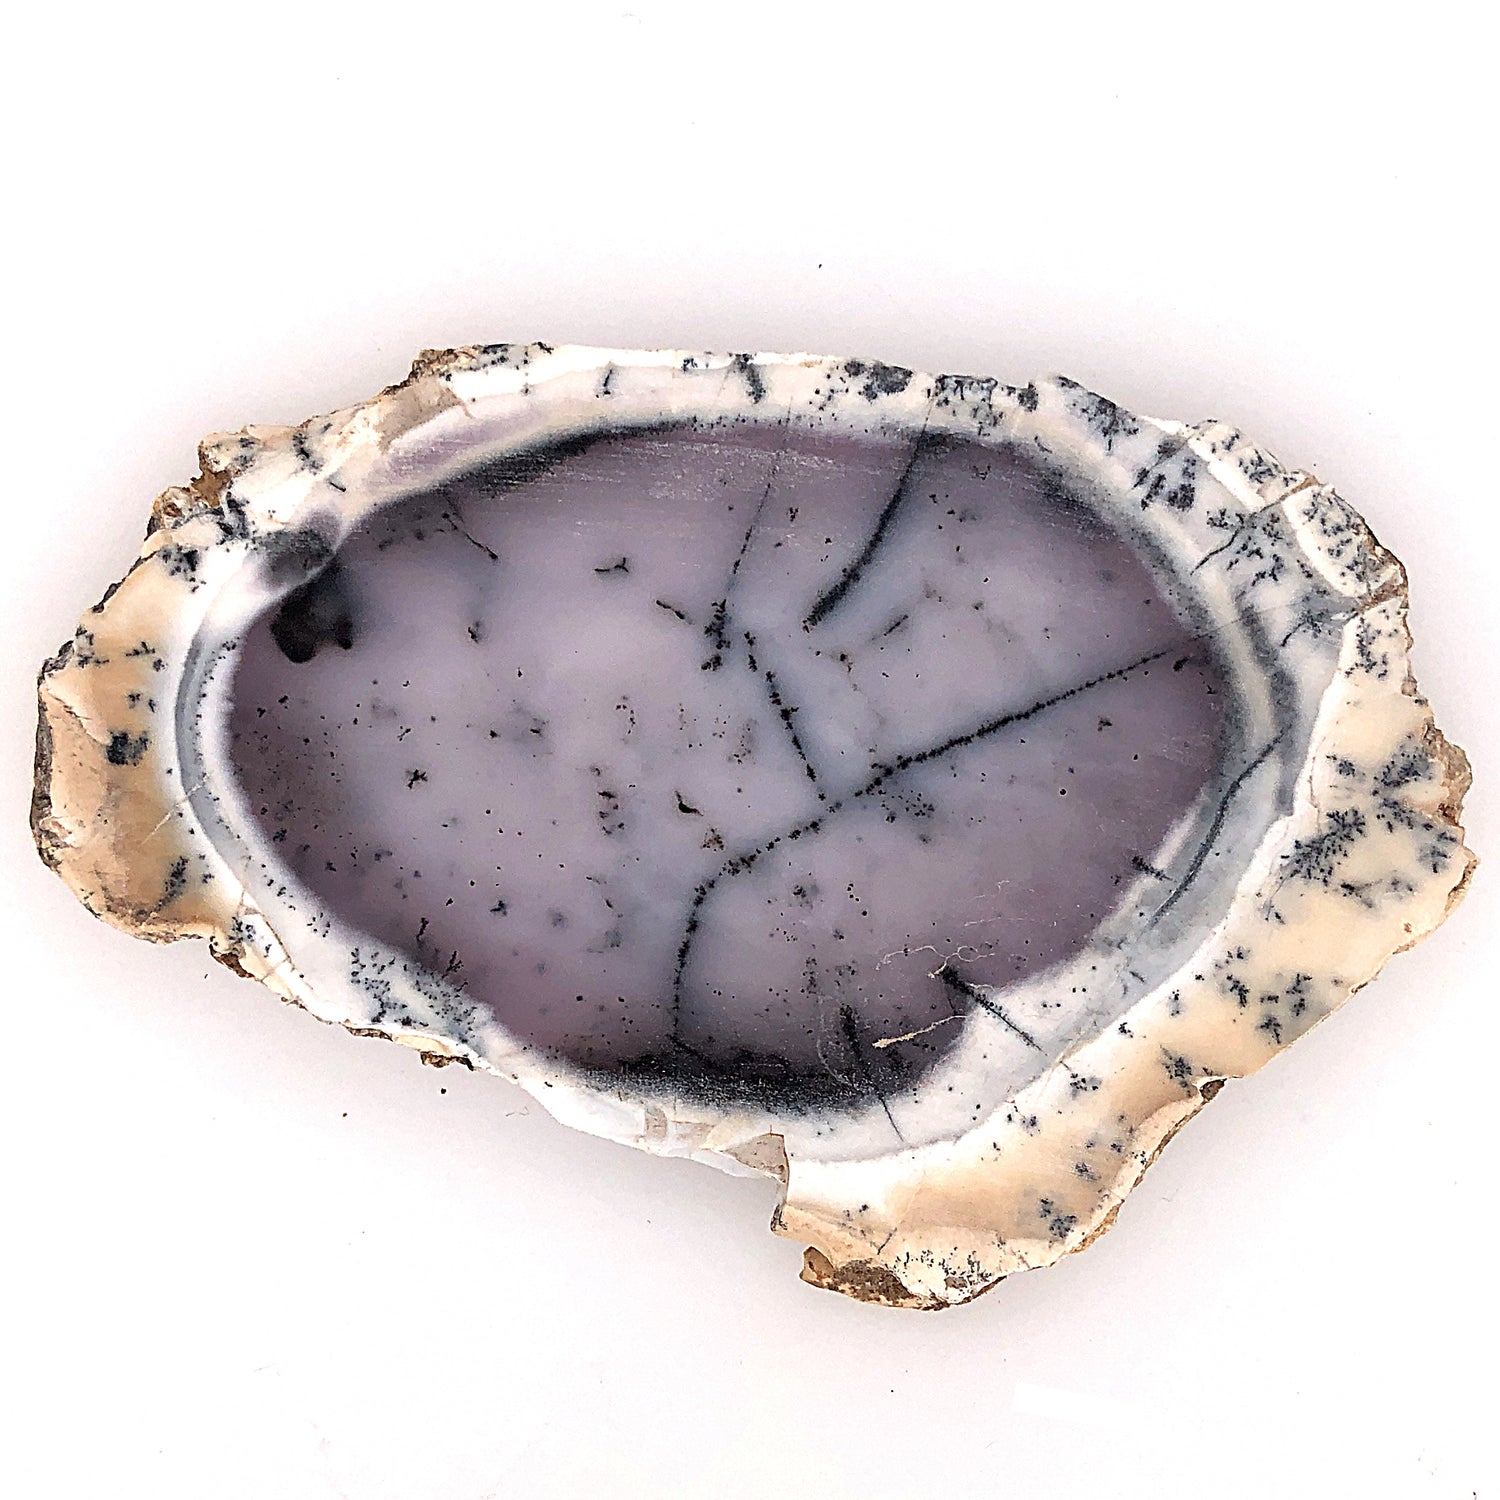 material: dendritic opal agate